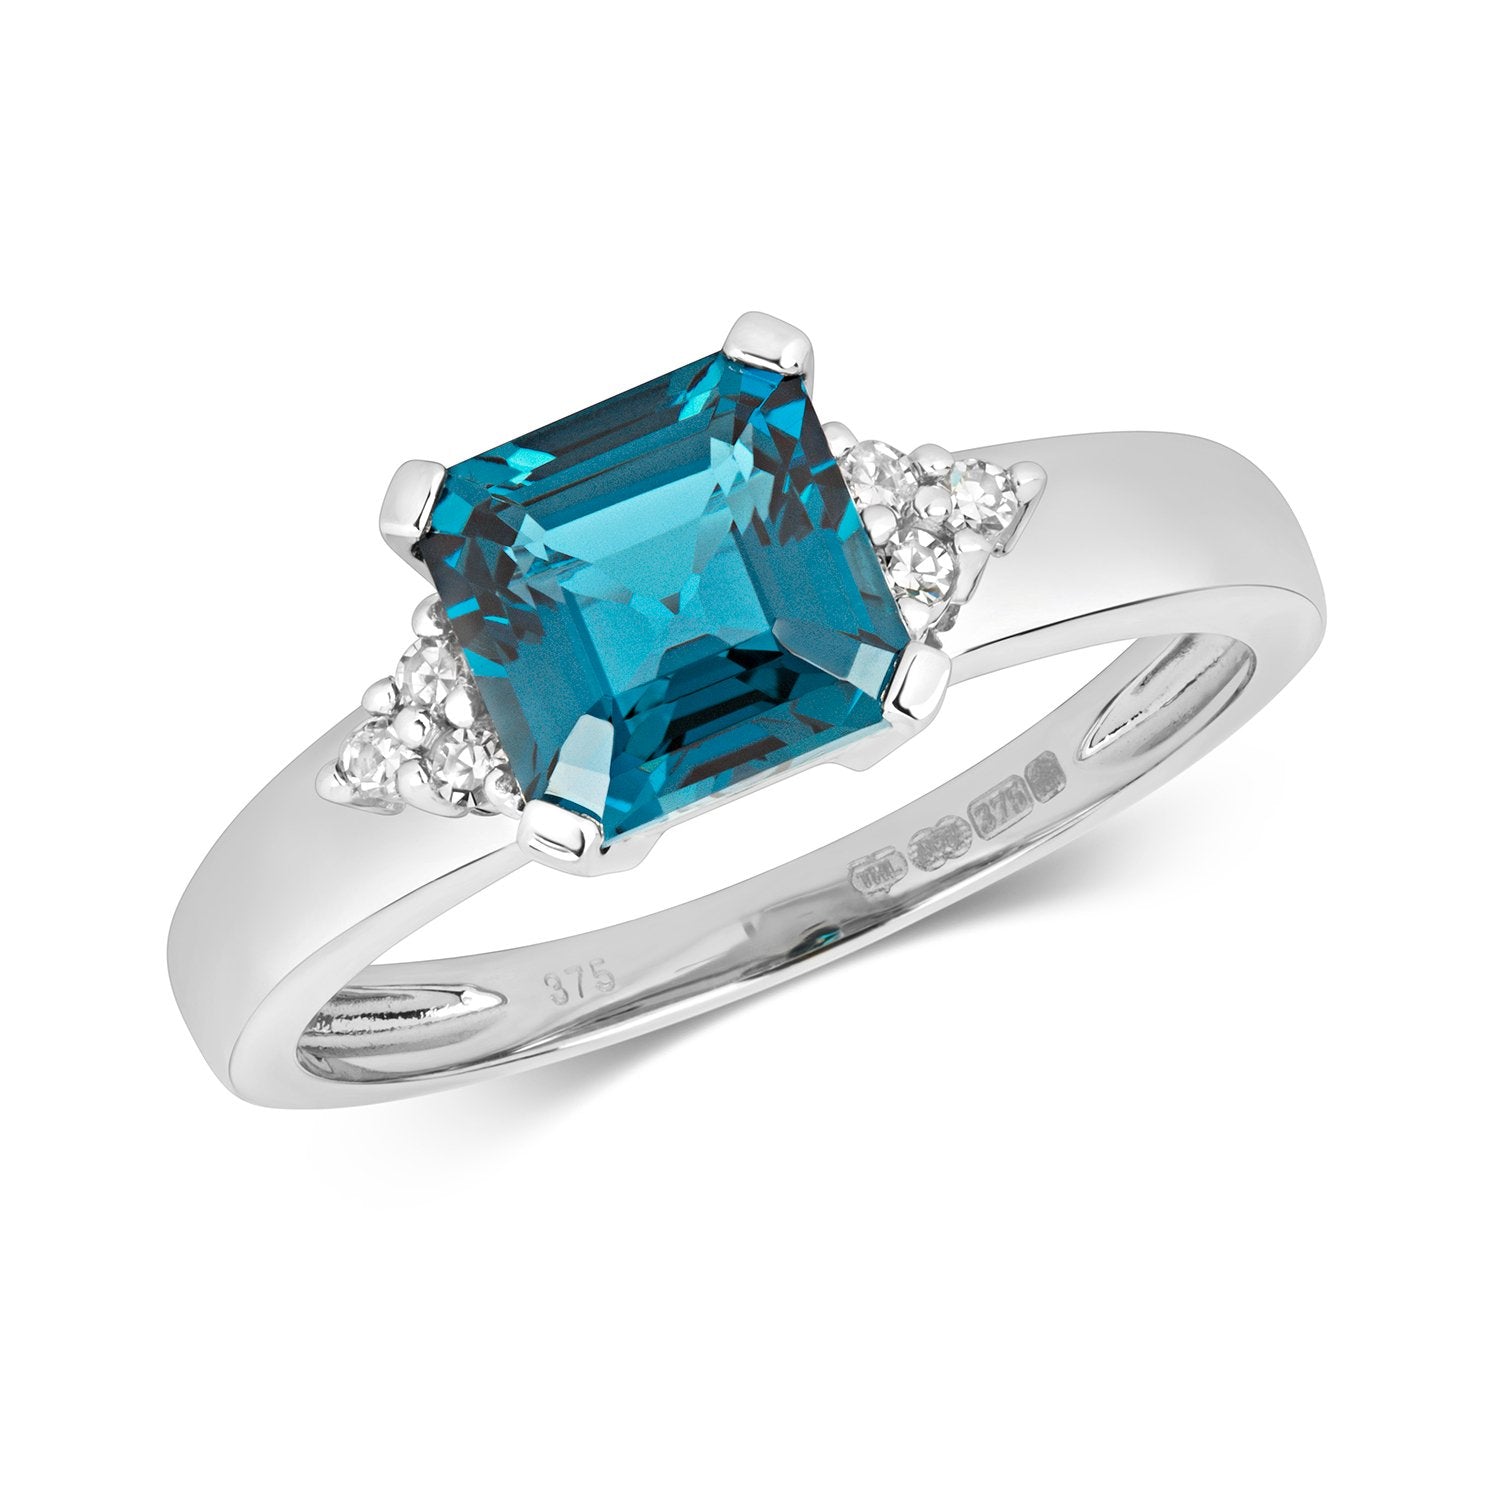 London Blue Topaz & Diamond Ring (Rd462wlb)